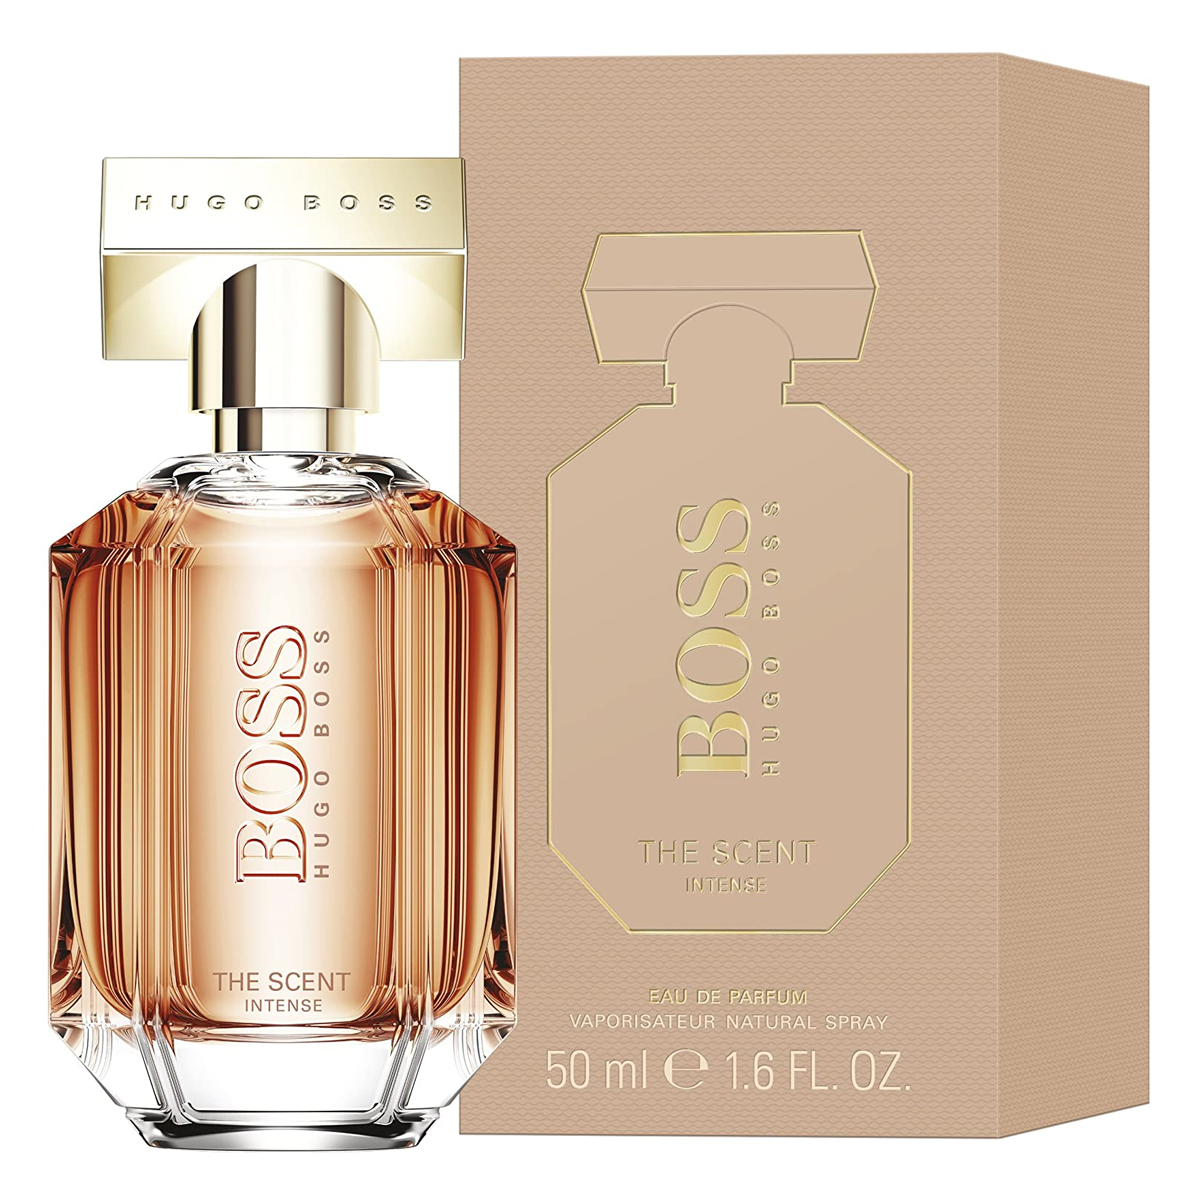 The Scent Intense Edp Perfume Hugo Boss in Canada – Perfumeonline.ca